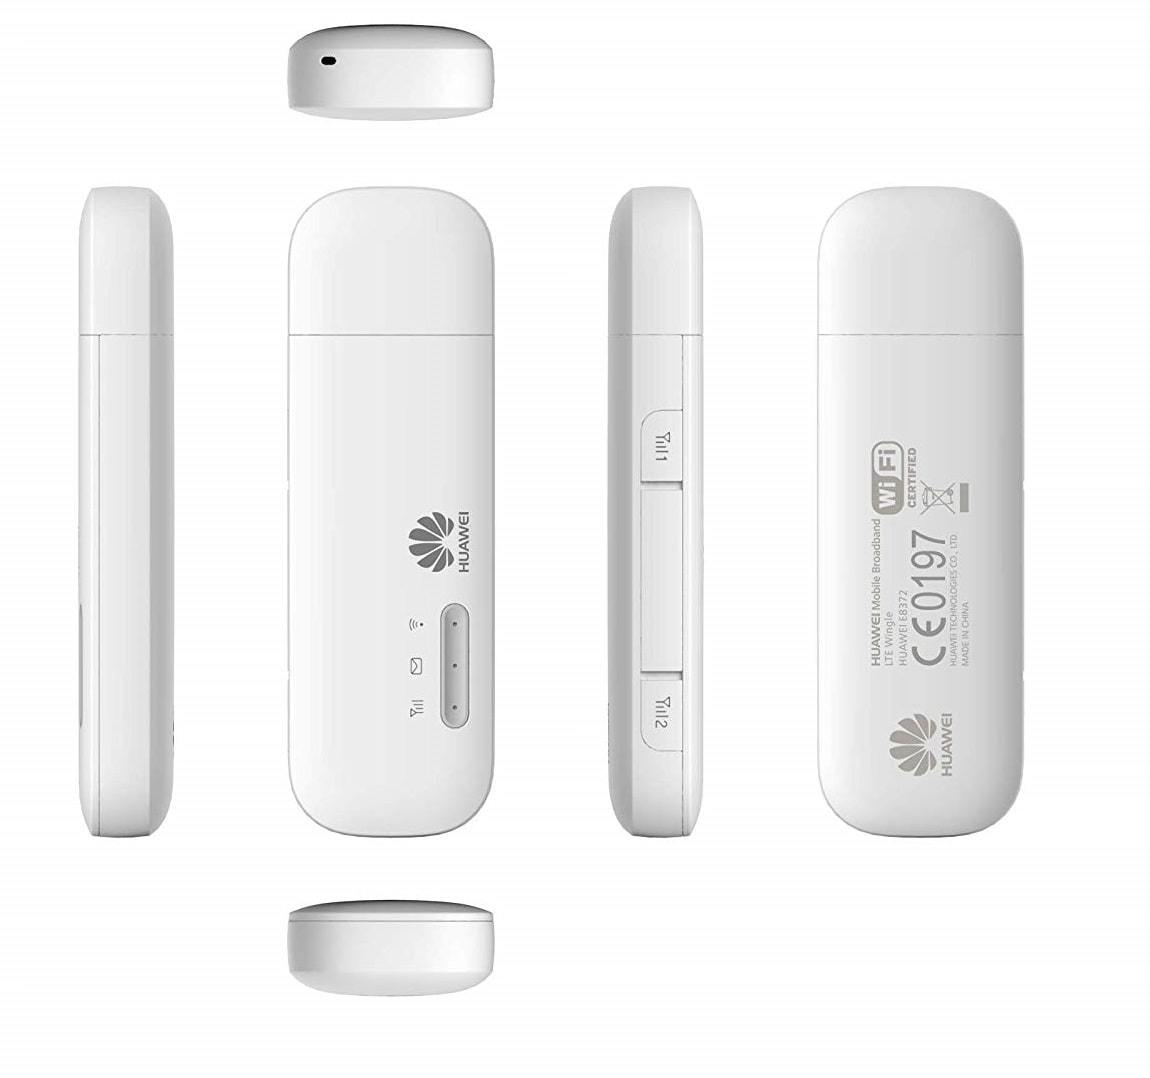 Huawei E8372h-153 / MF79U Wireless 4G LTE Hotspot Pocket Router